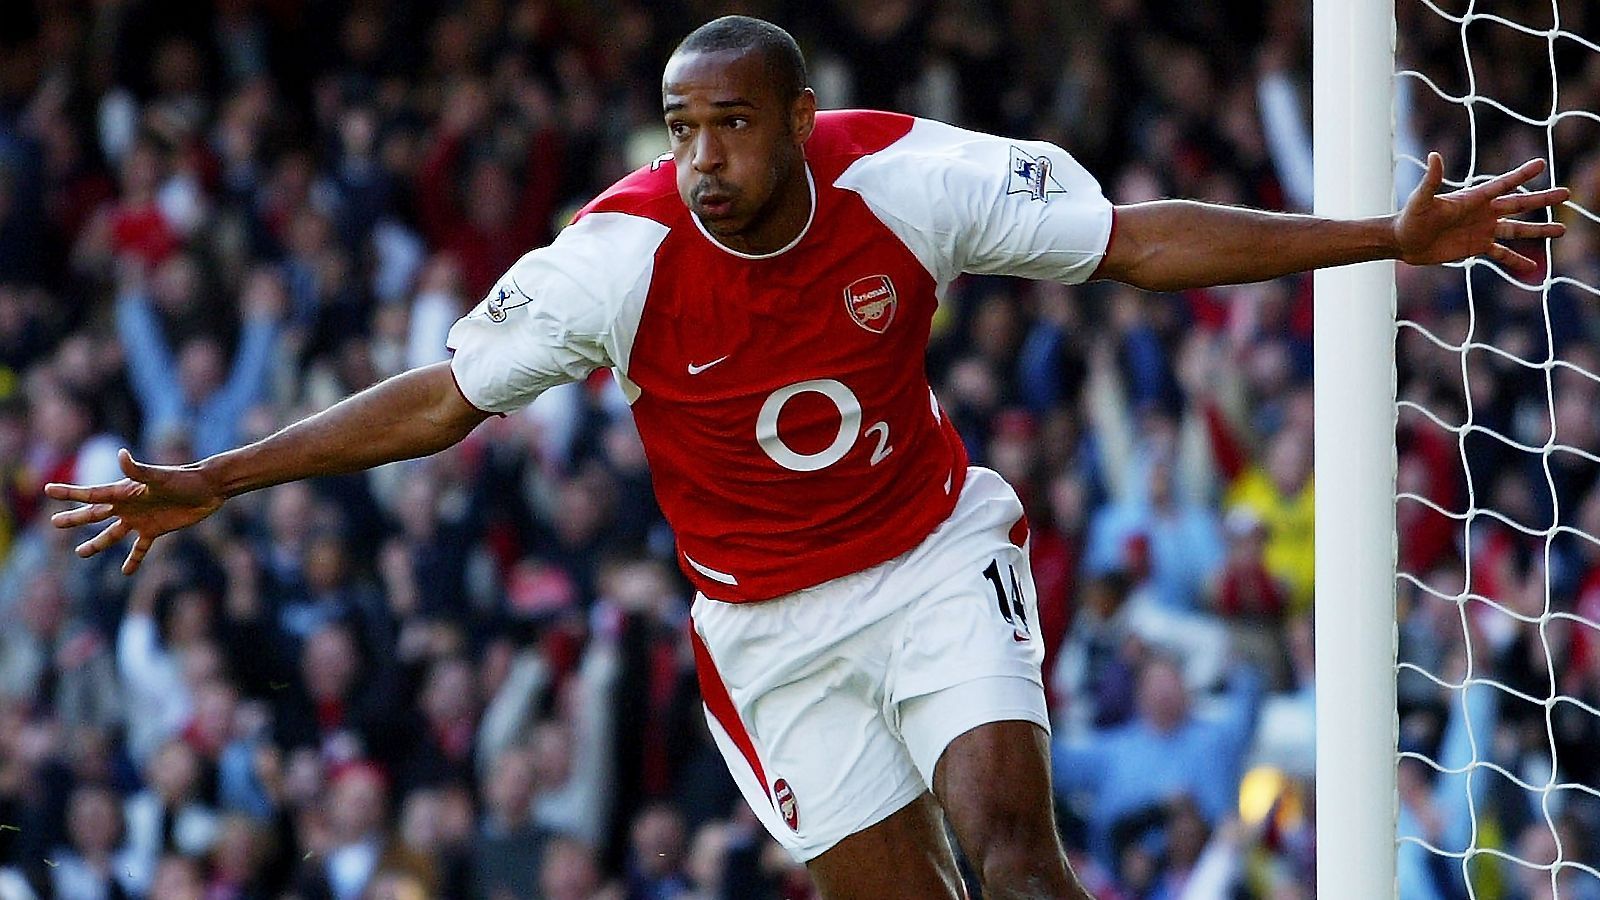 
                <strong>Thierry Henry (FC Arsenal)</strong><br>
                Traf in drei Spielen in Folge nach dem Saisonbeginn 2003/04
              